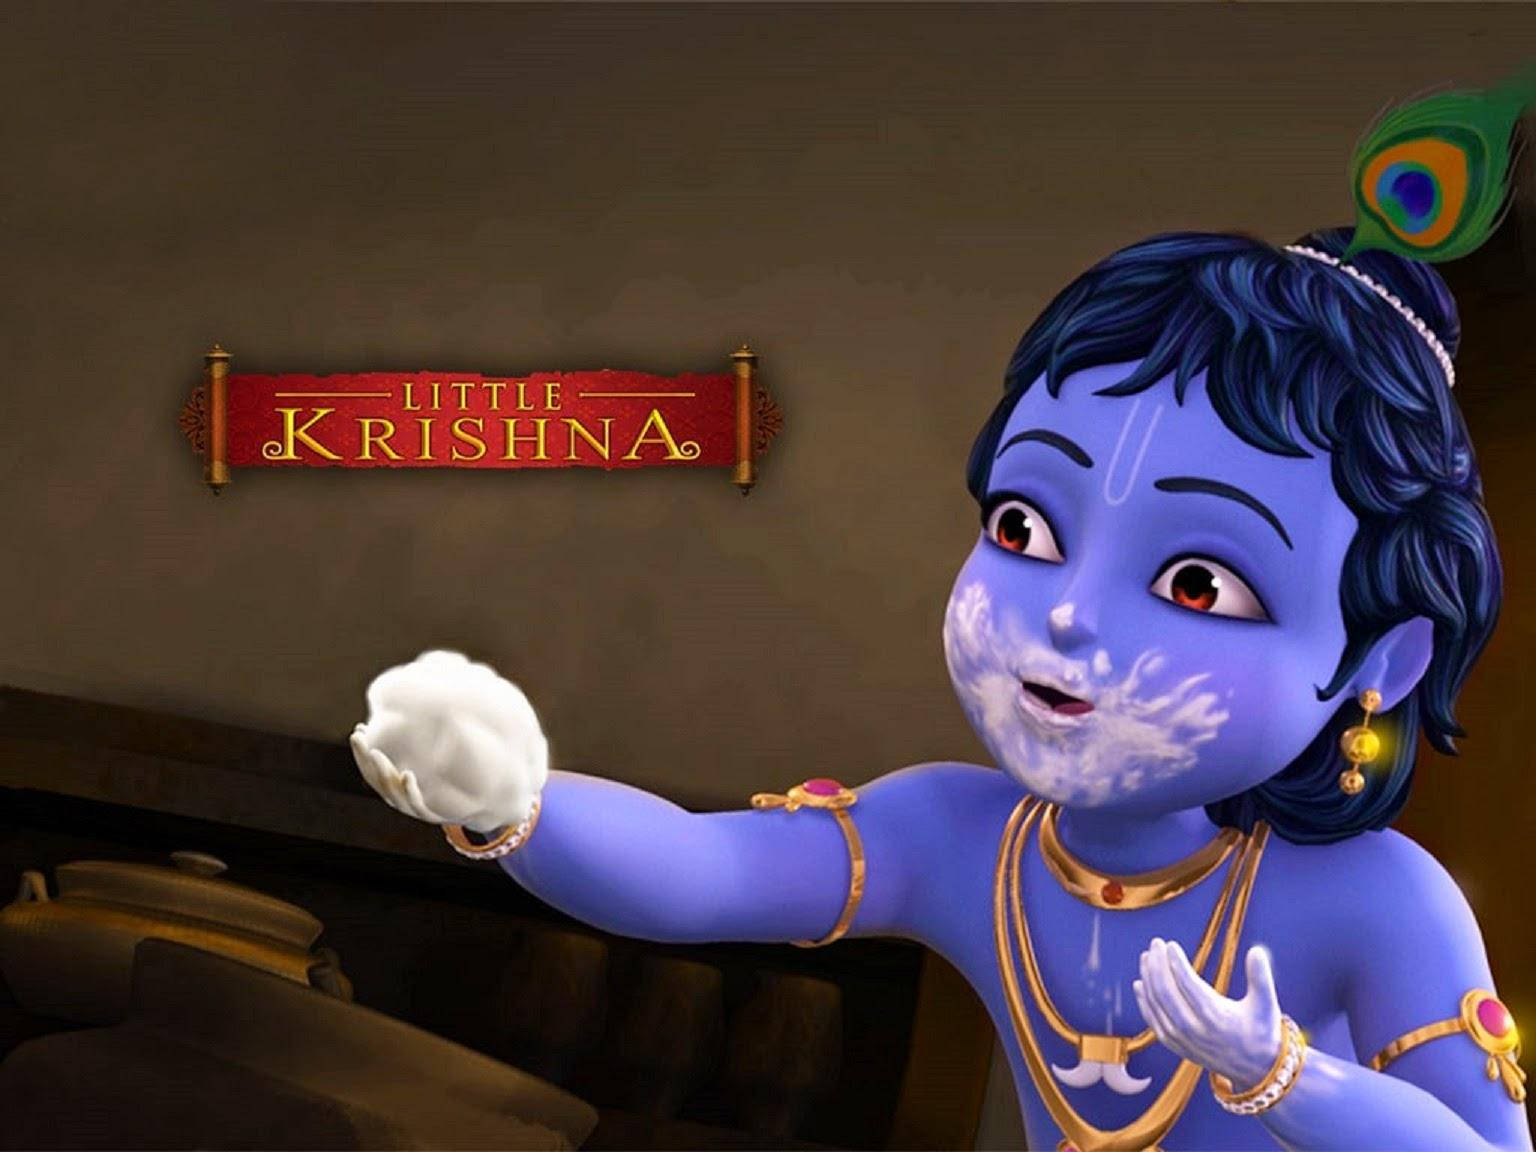 Adorable Little Krishna - Hd Image Holding A Butter Ball.